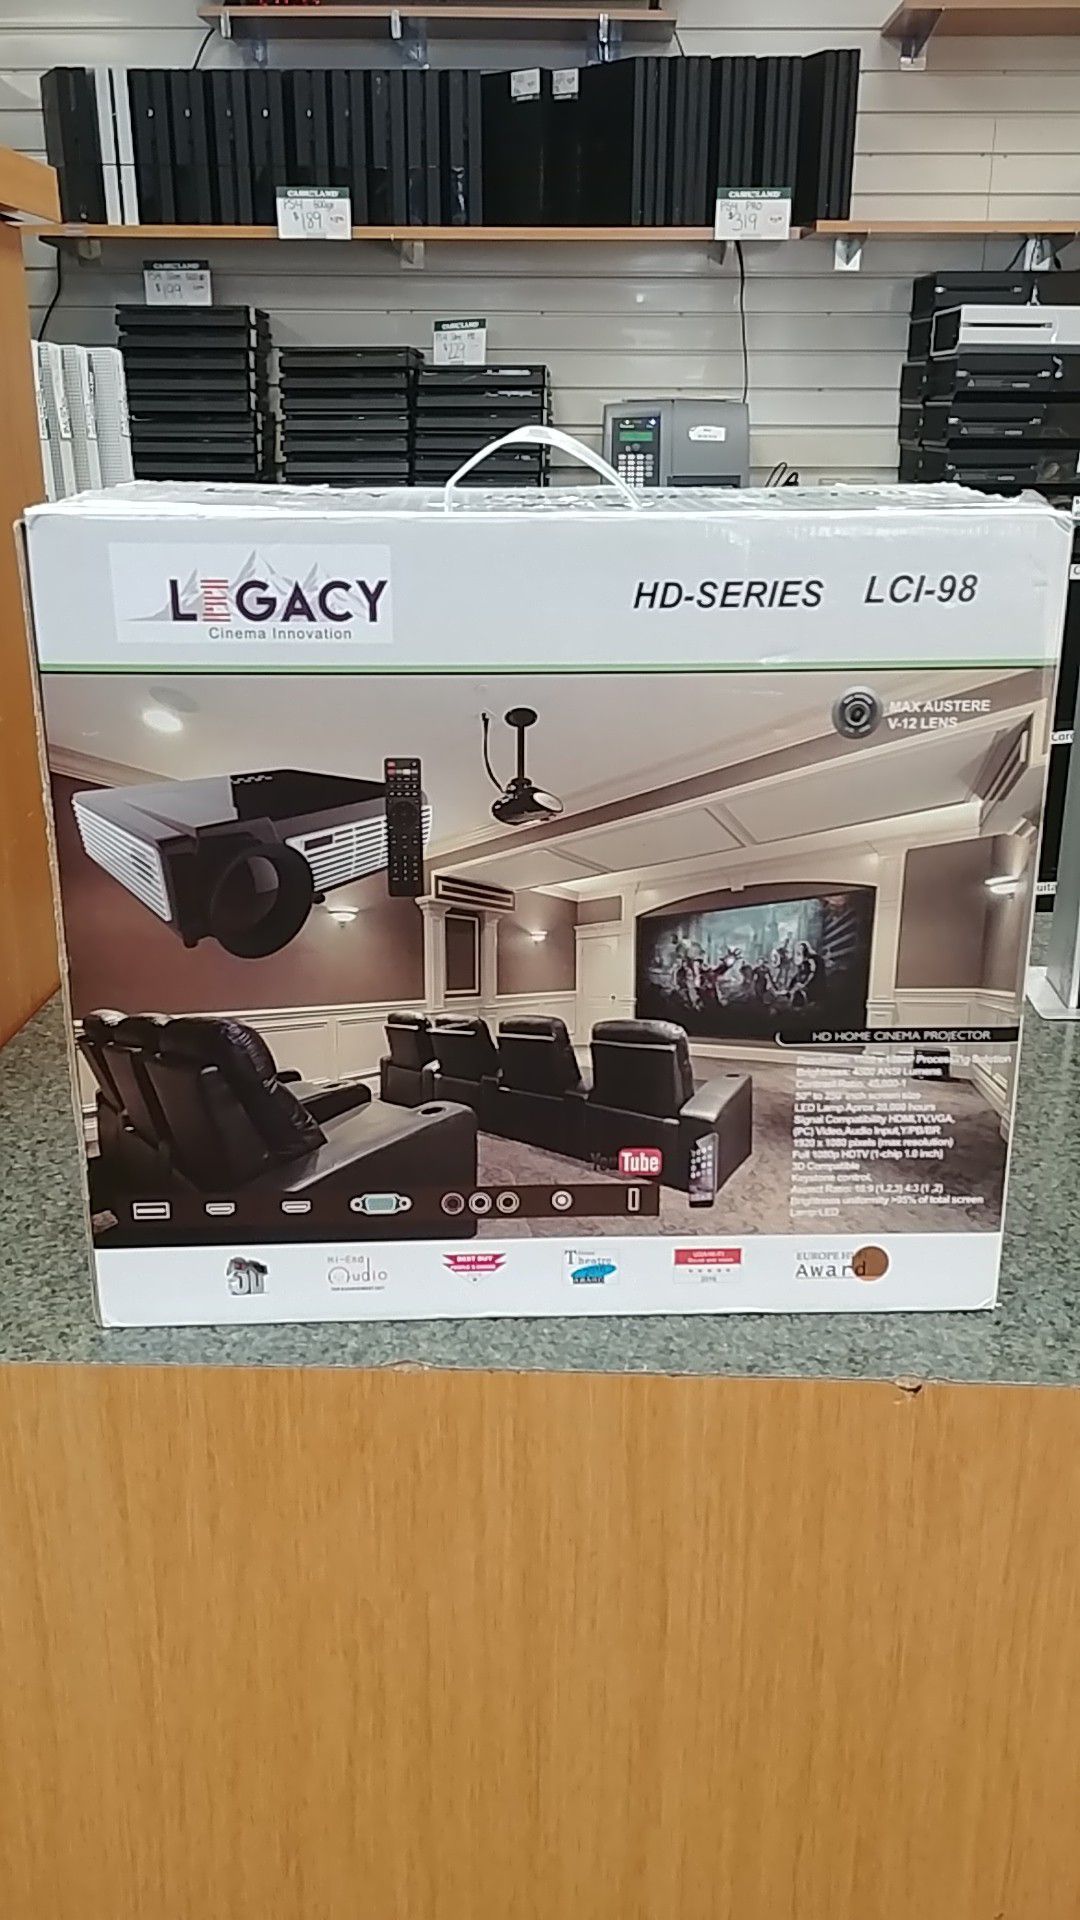 Legacy HD-Series LCI-98 Projector